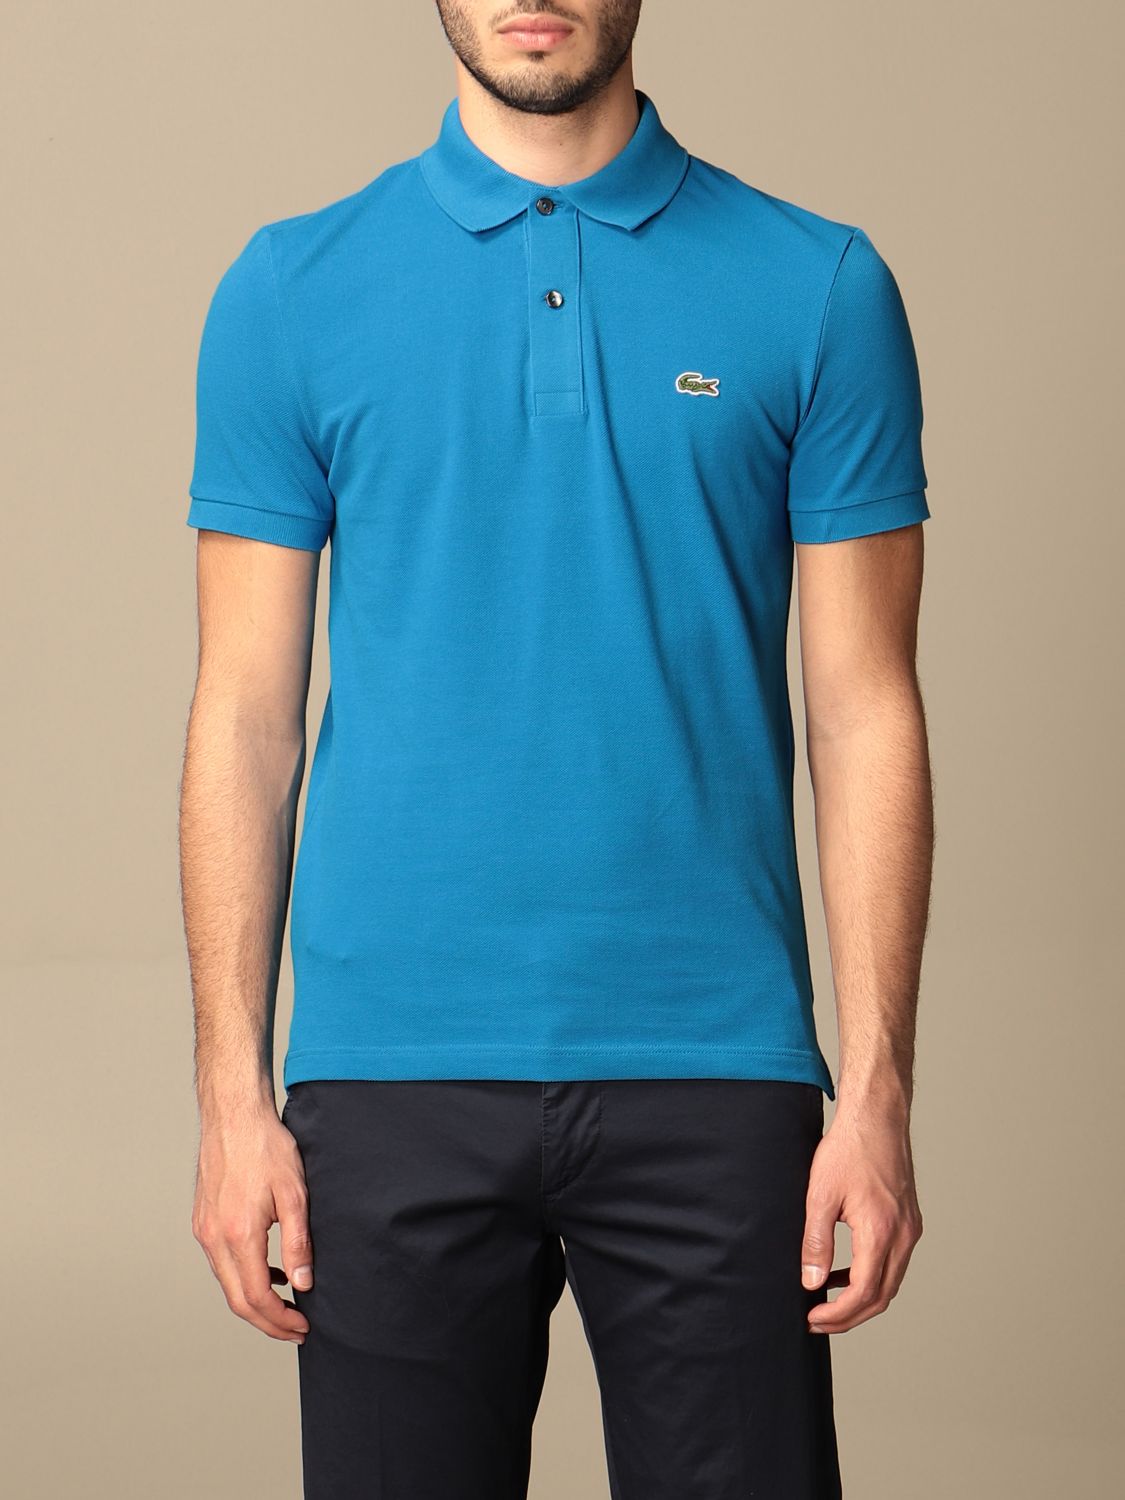 LACOSTE: basic cotton polo shirt with logo - Royal Blue | Lacoste polo